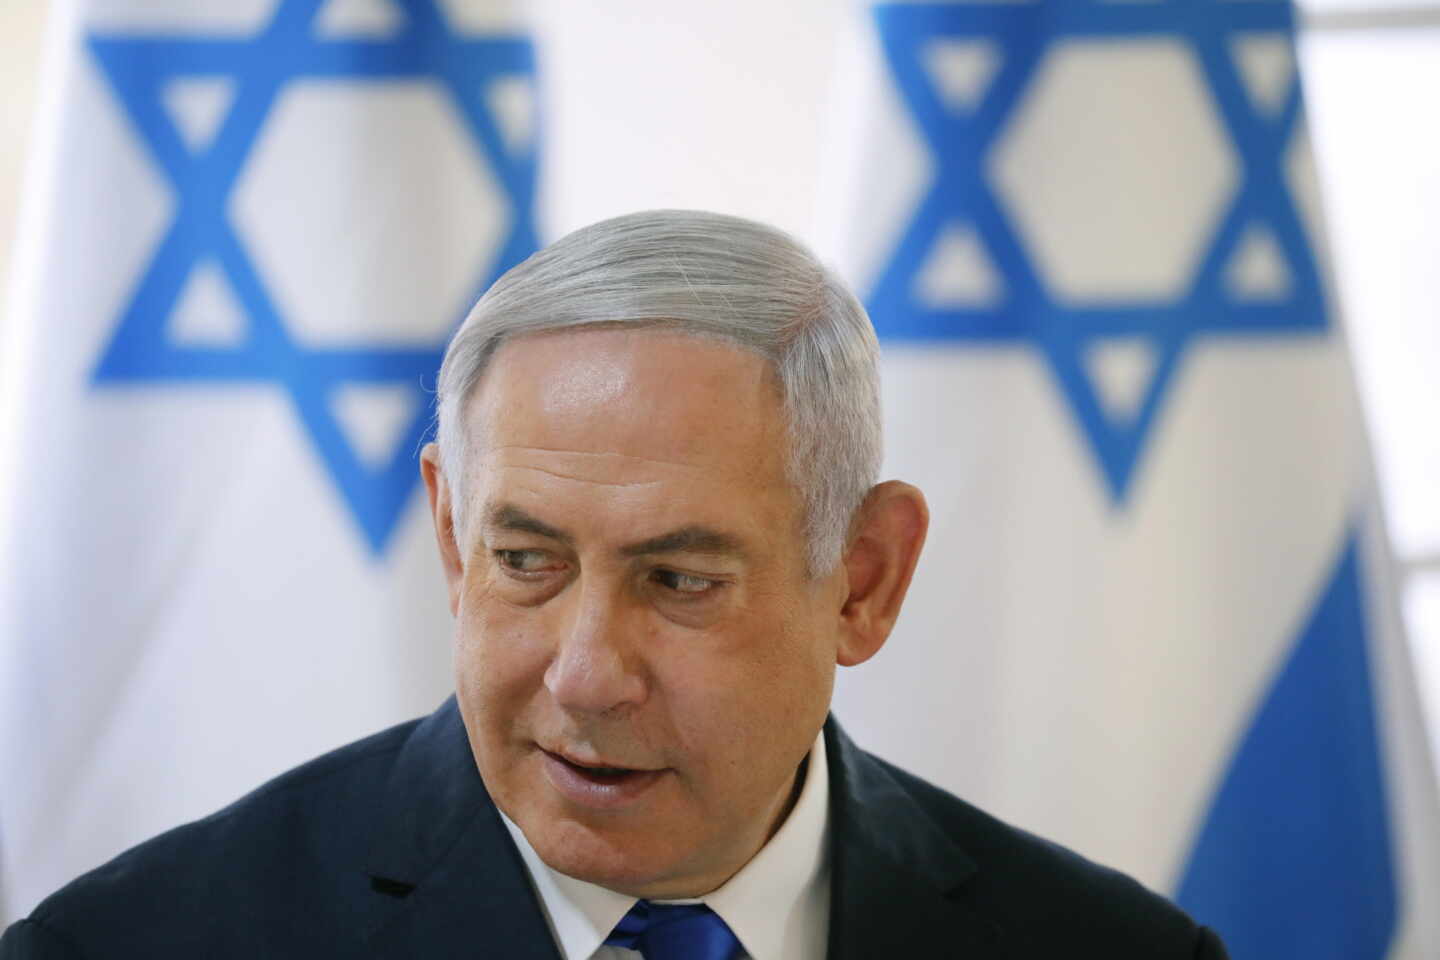 Netanyahu elecciones Israel